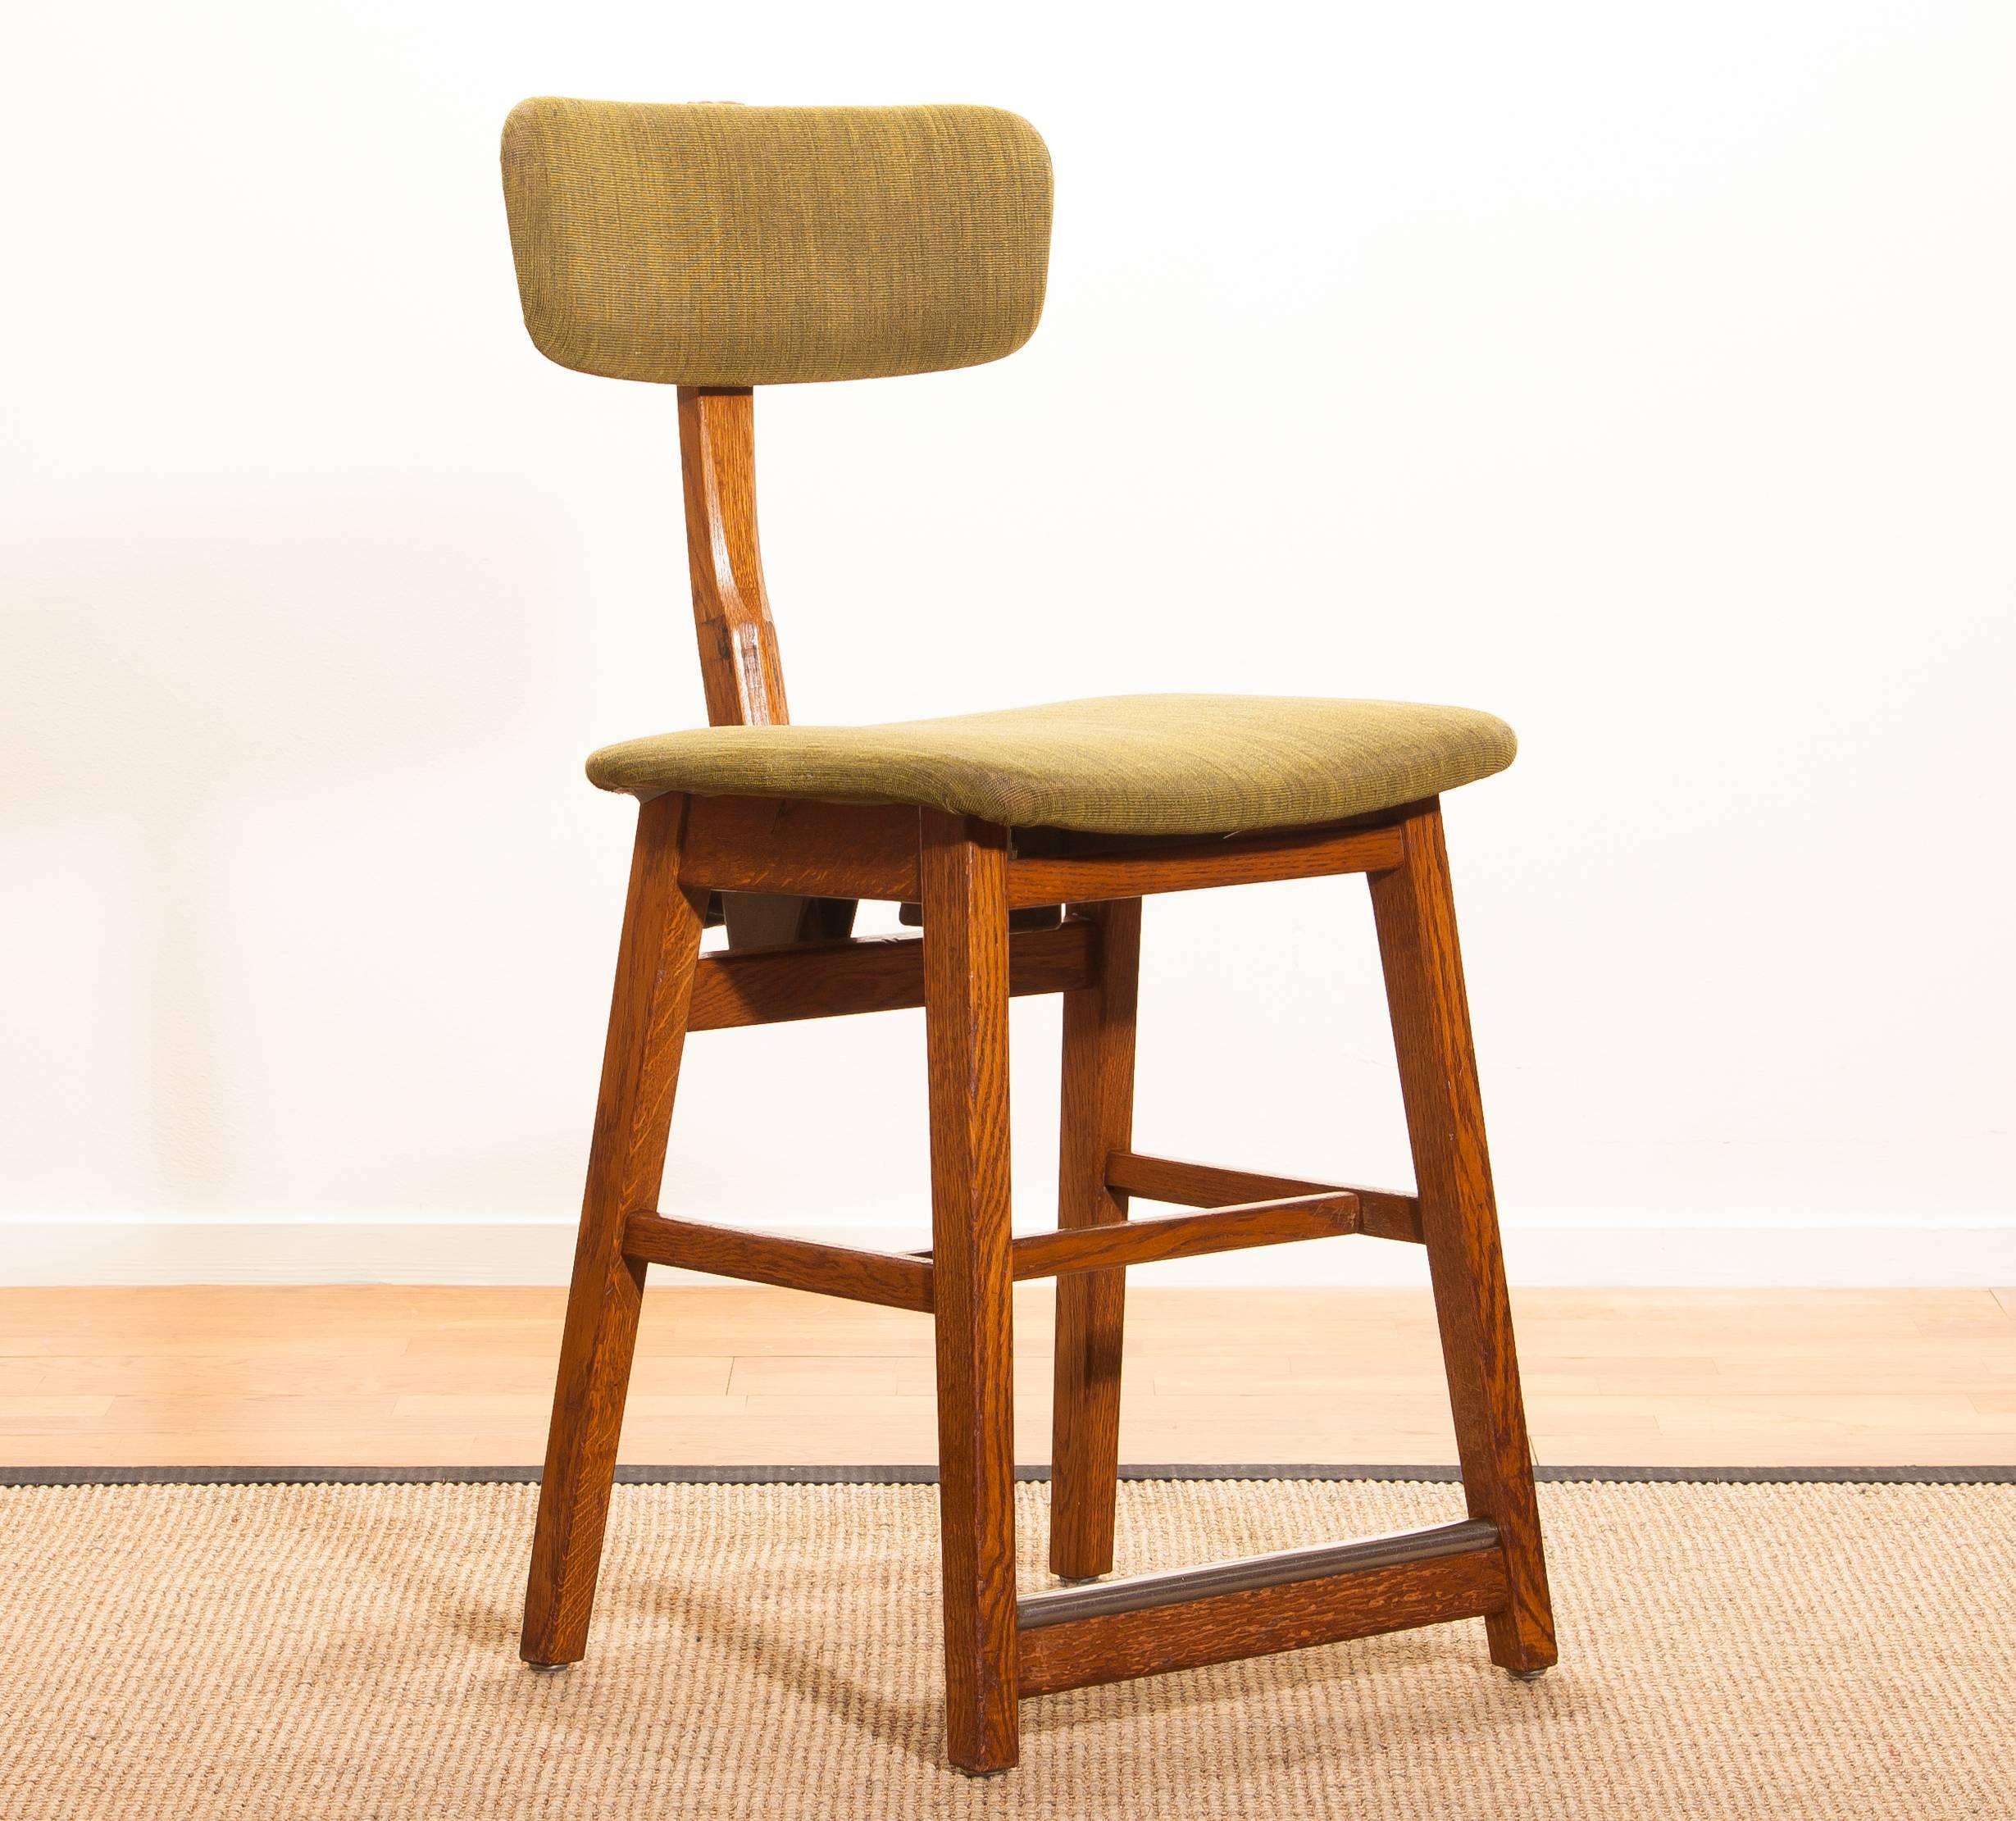 1960s, Teak and Wool Desk Chair by Âtvidabergs Sweden In Good Condition In Silvolde, Gelderland